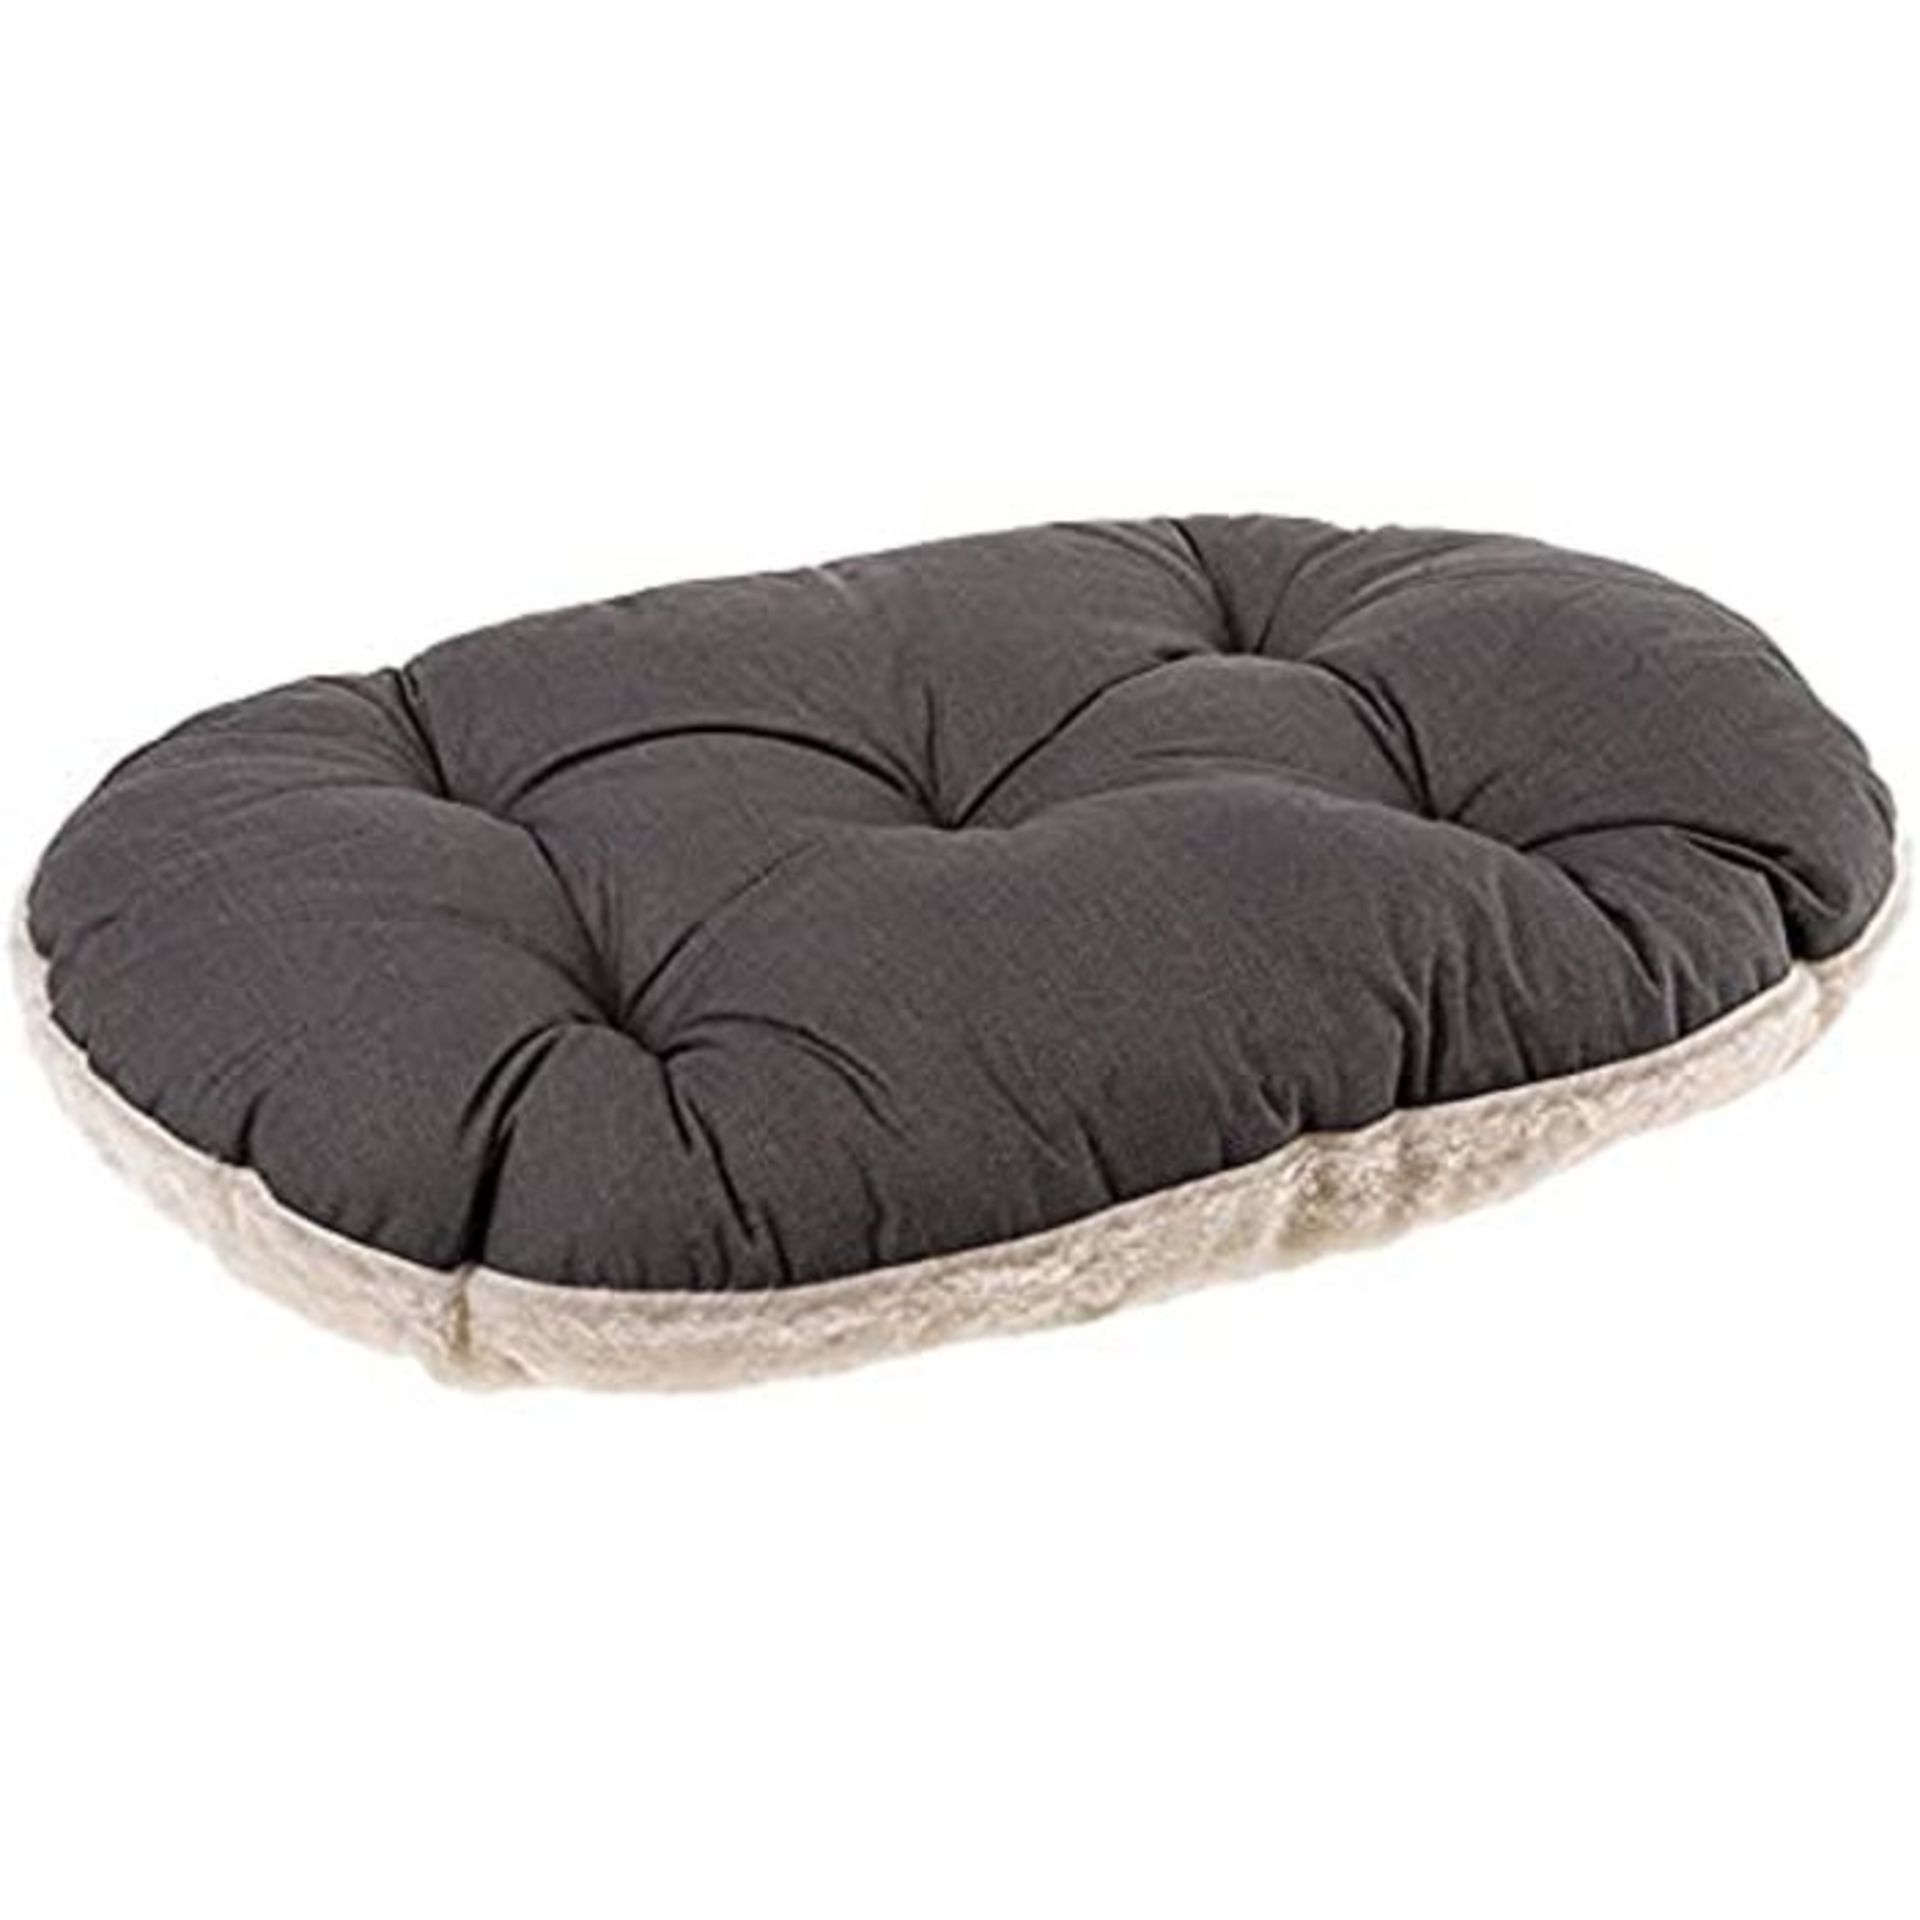 Ferplast Relax F 55/4 Cat and Dog Bed, Cotton/Fur, 55 x 36 cm, Grey/Beige